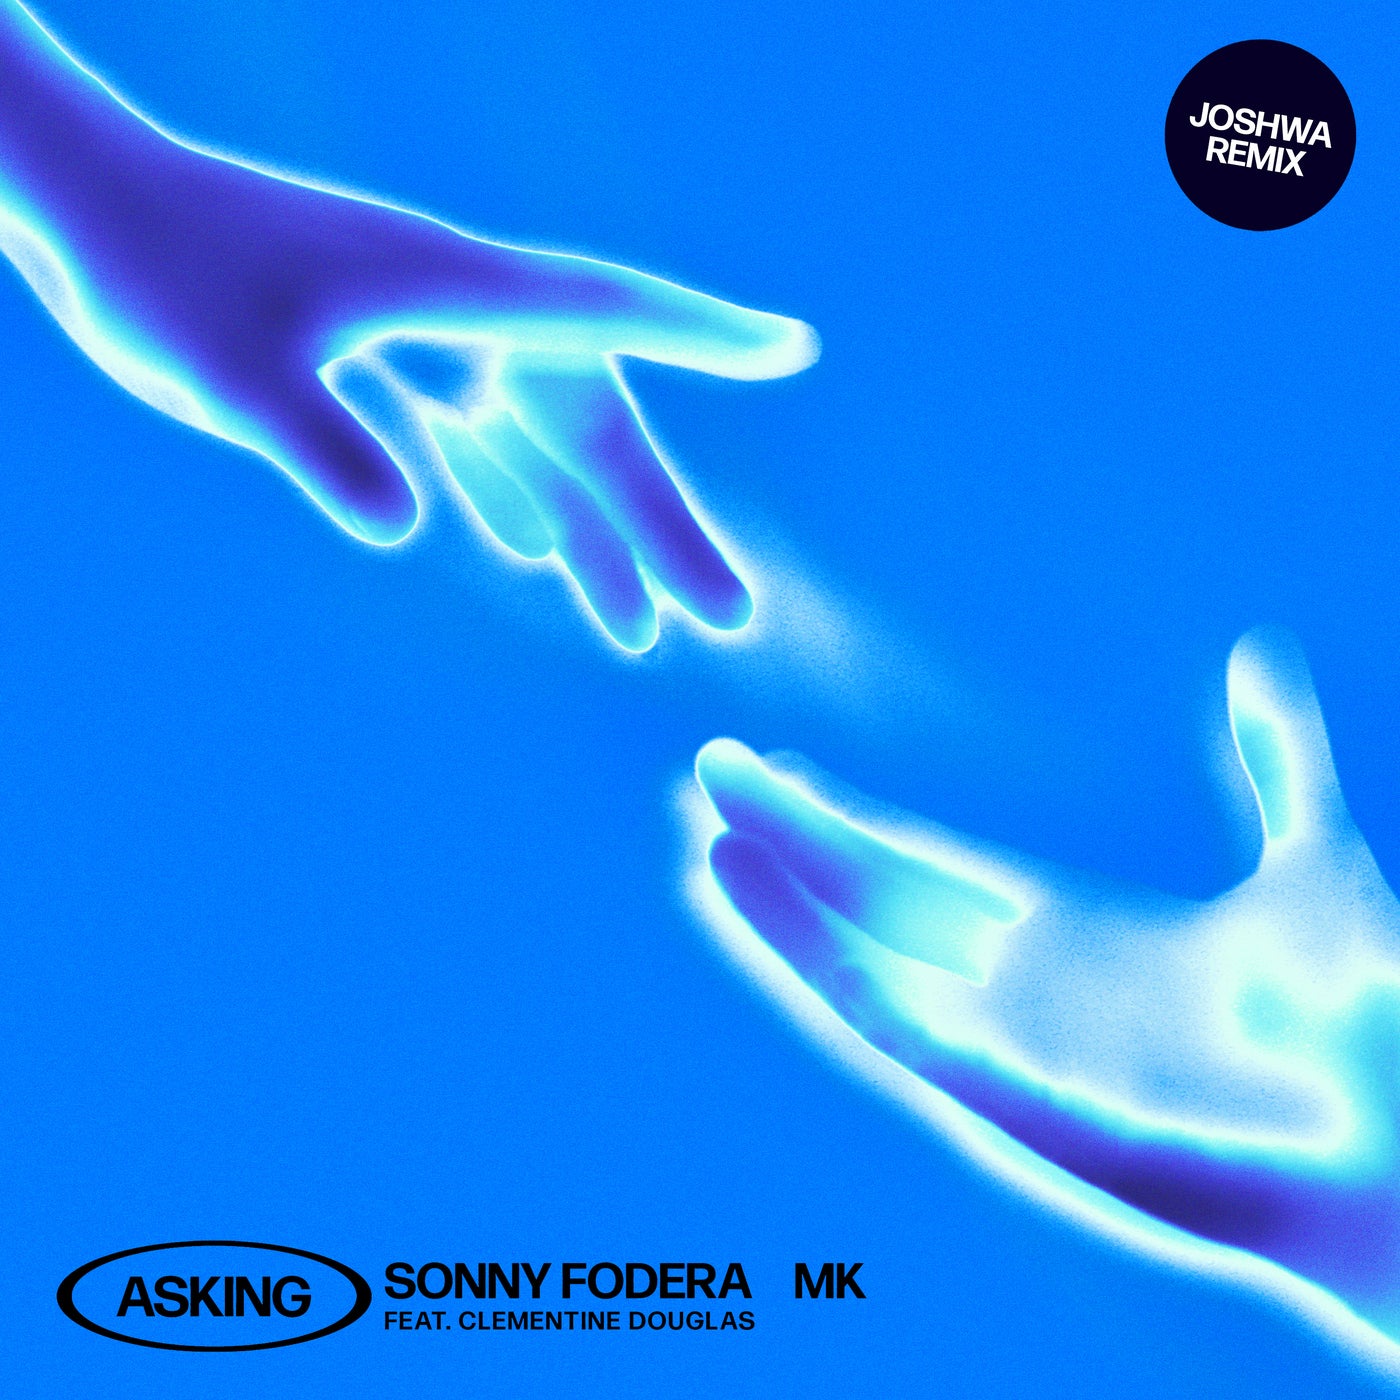 MK x Sonny Fodera - Asking feat. Clementine Douglas (Joshwa Extended Remix)